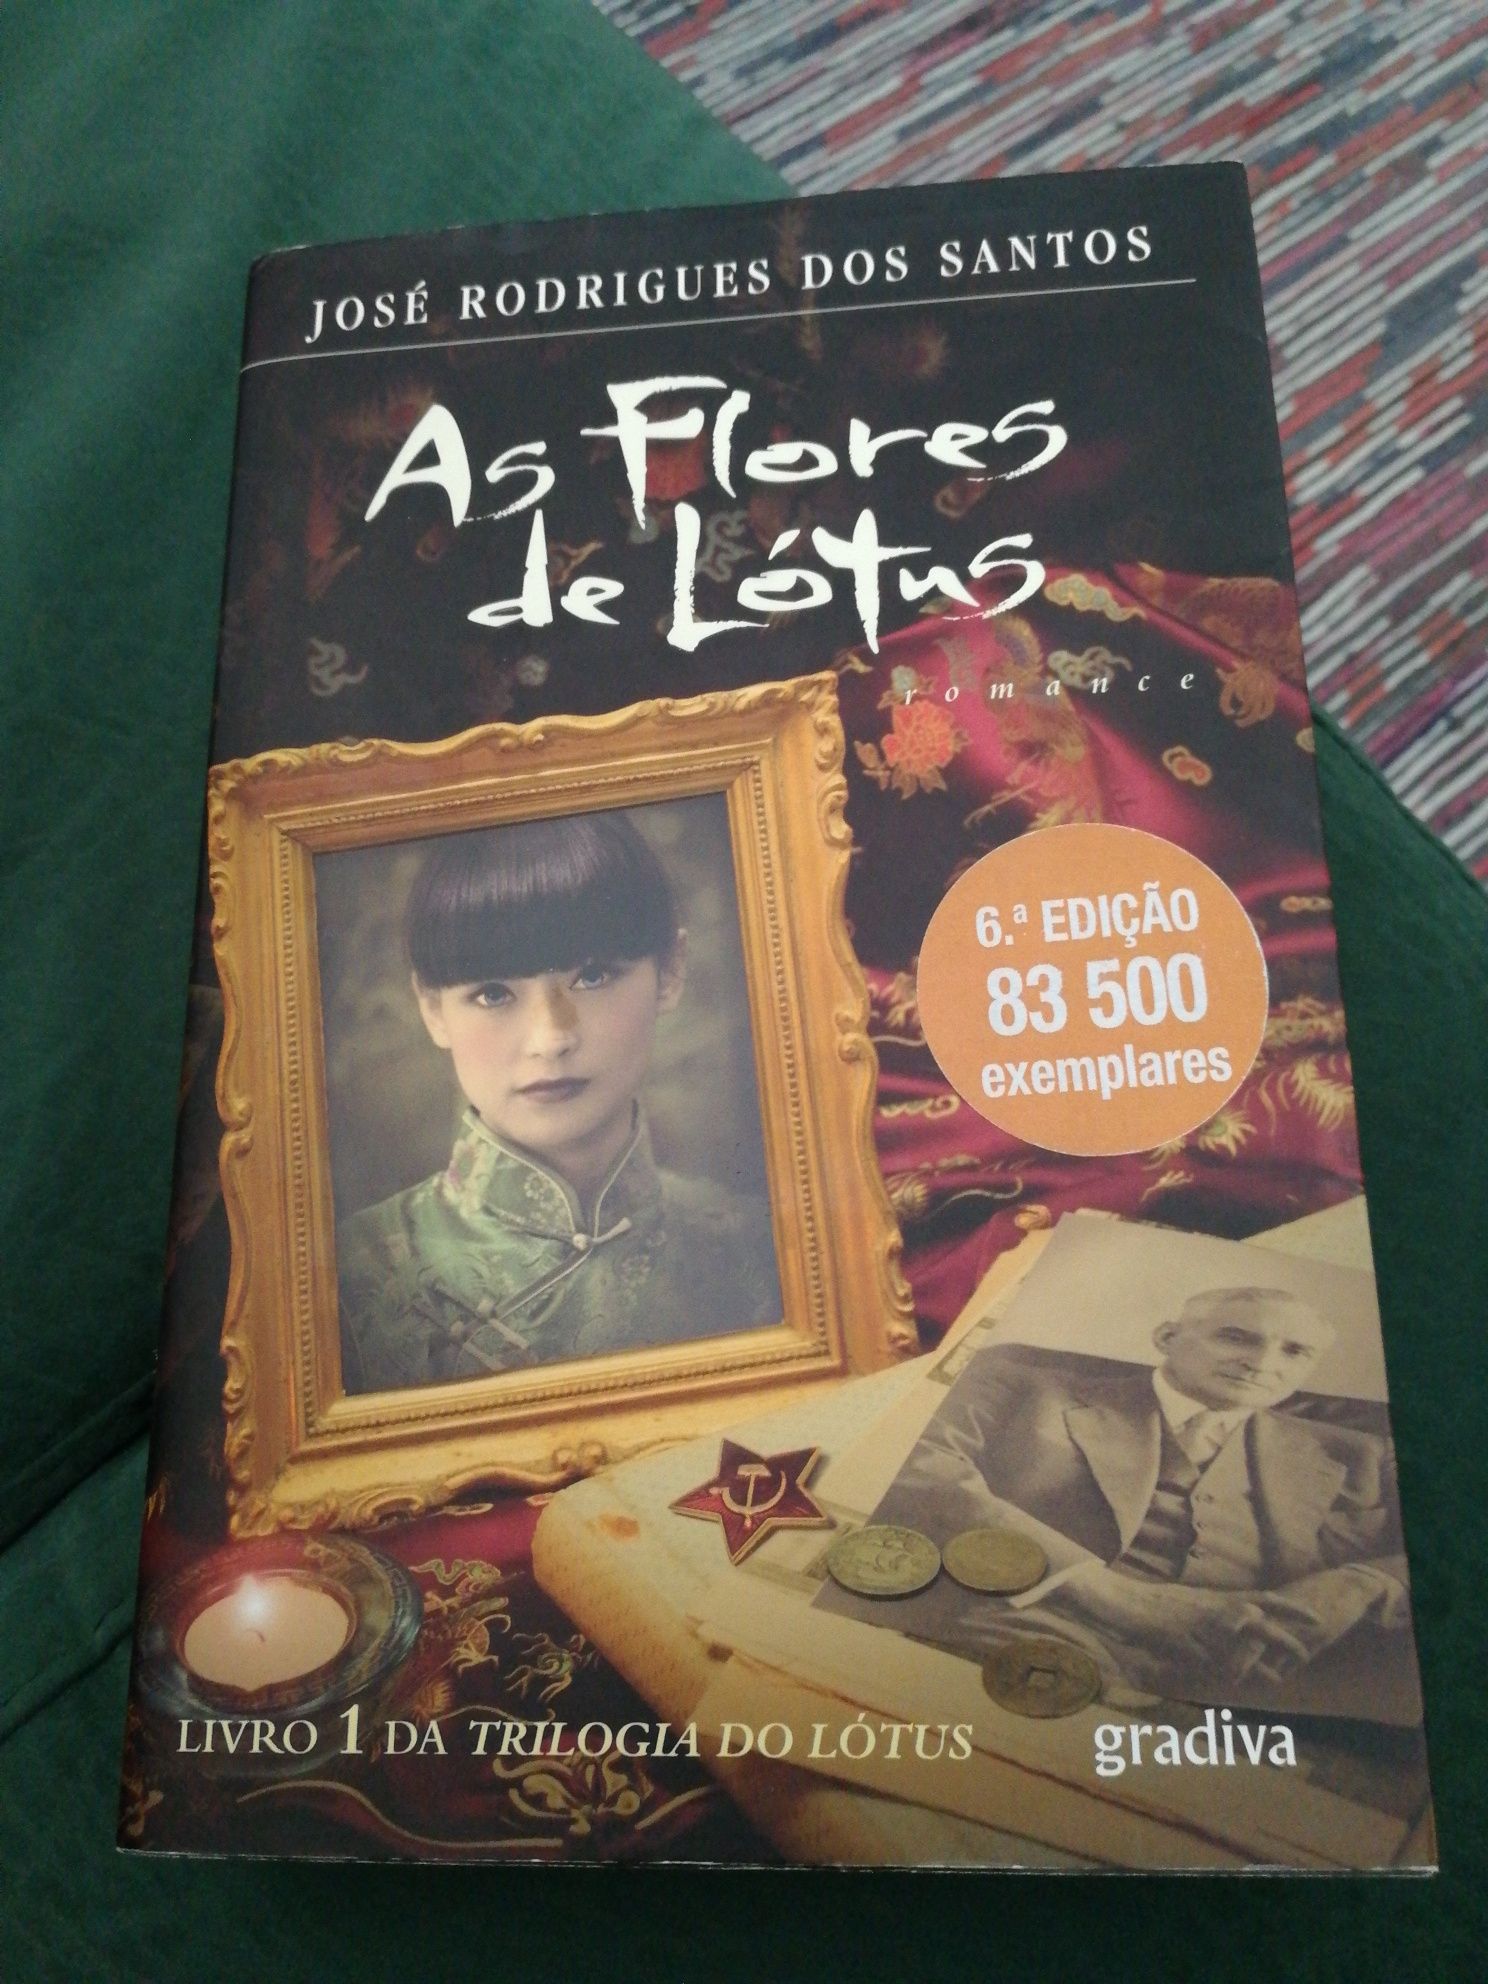 Livro "As Flores de Lótus" de José Rodrigues dos Santos